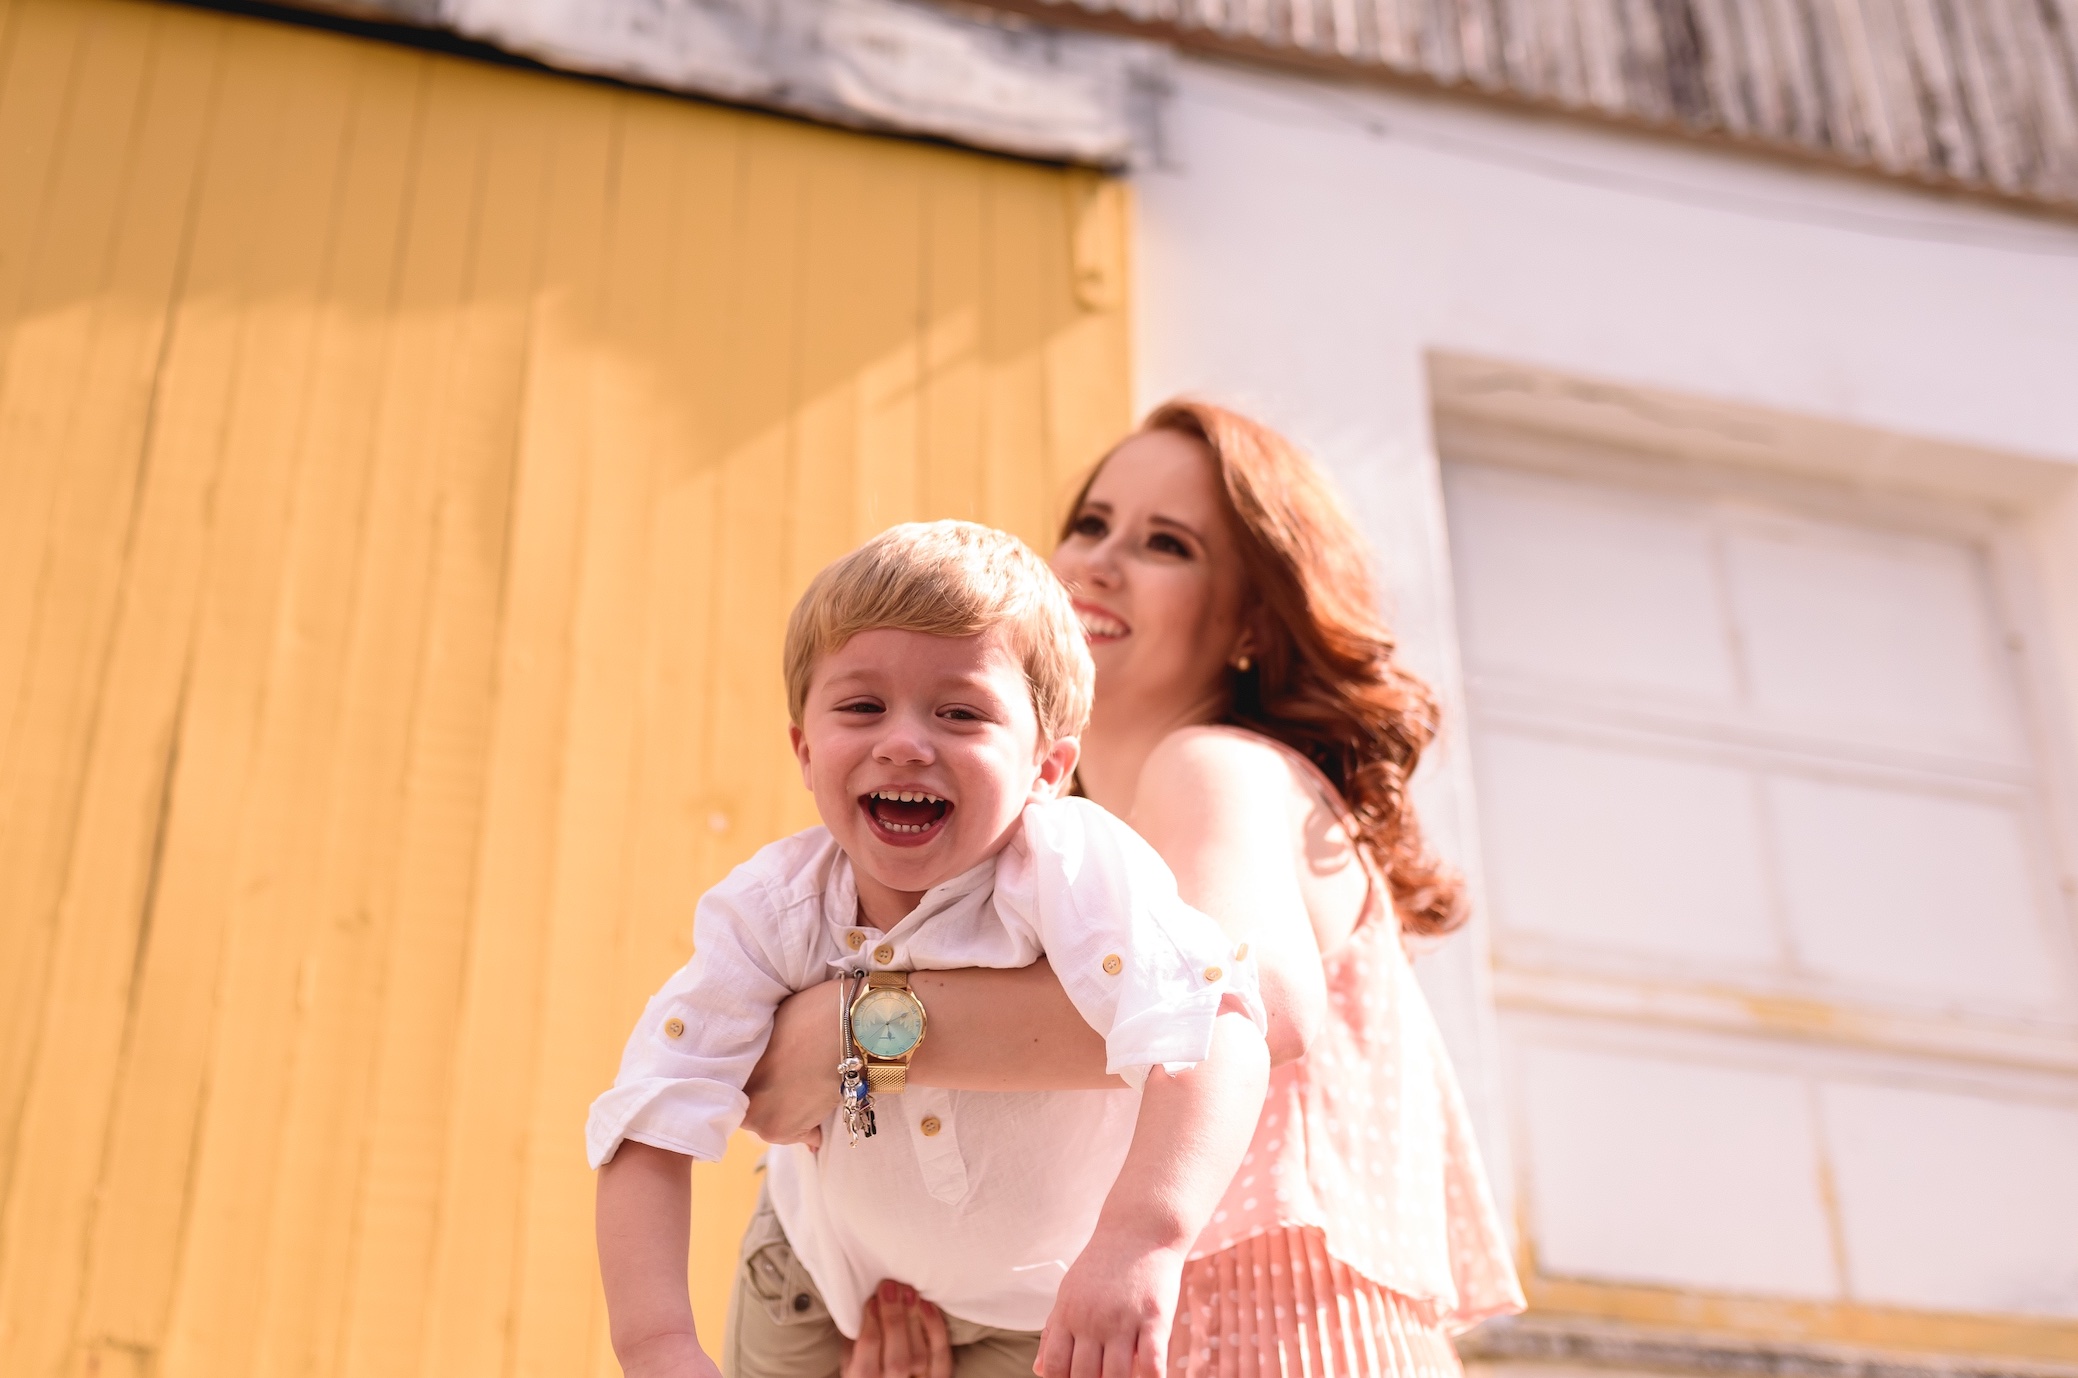 Smiling redheaded woman holding smiling blonde toddler boy; image by Fernanda Greppe, via Unsplash.com.